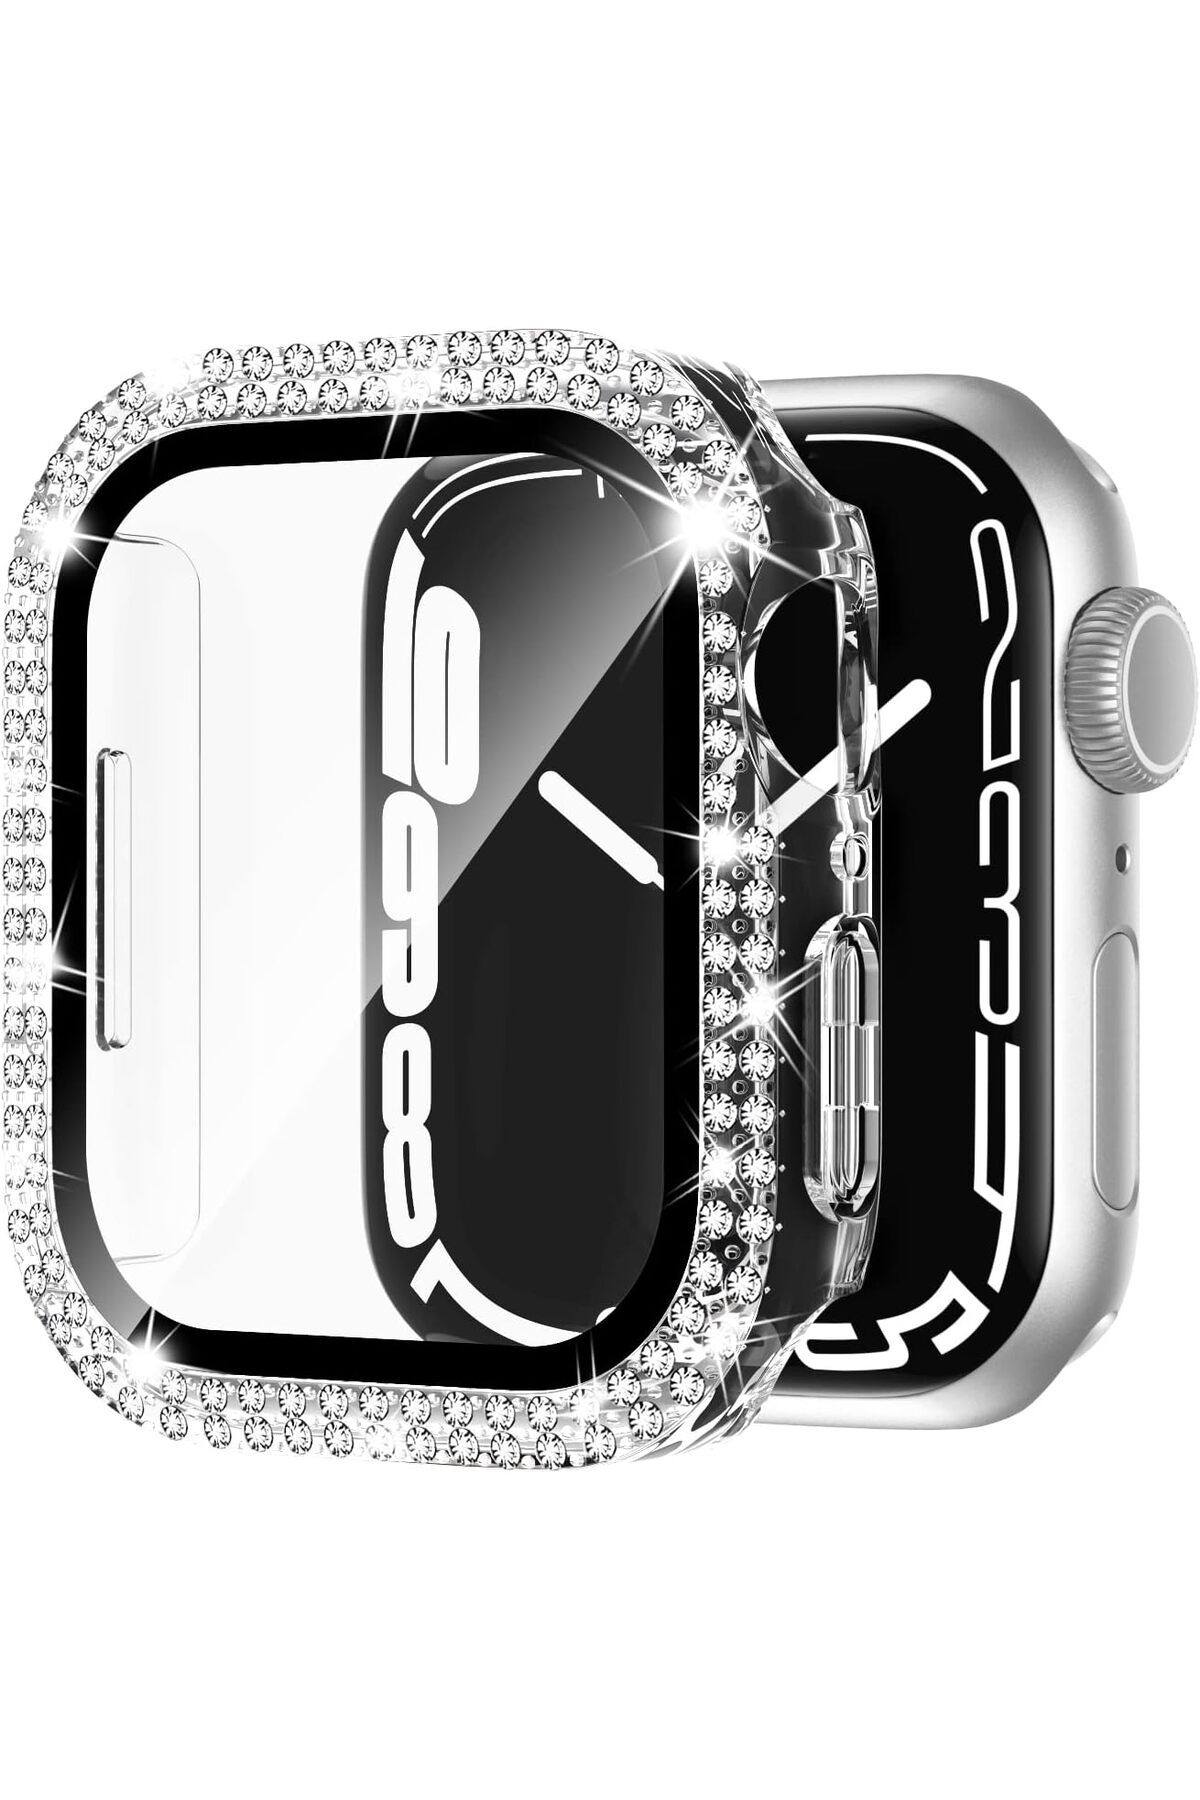 mimtec Apple Watch 1 2 3 4 5 6 7 8 9 Se Serisi Uyumlu 45mm Taşlı 360 Tam Koruma Şeffaf Silikon Kılıf